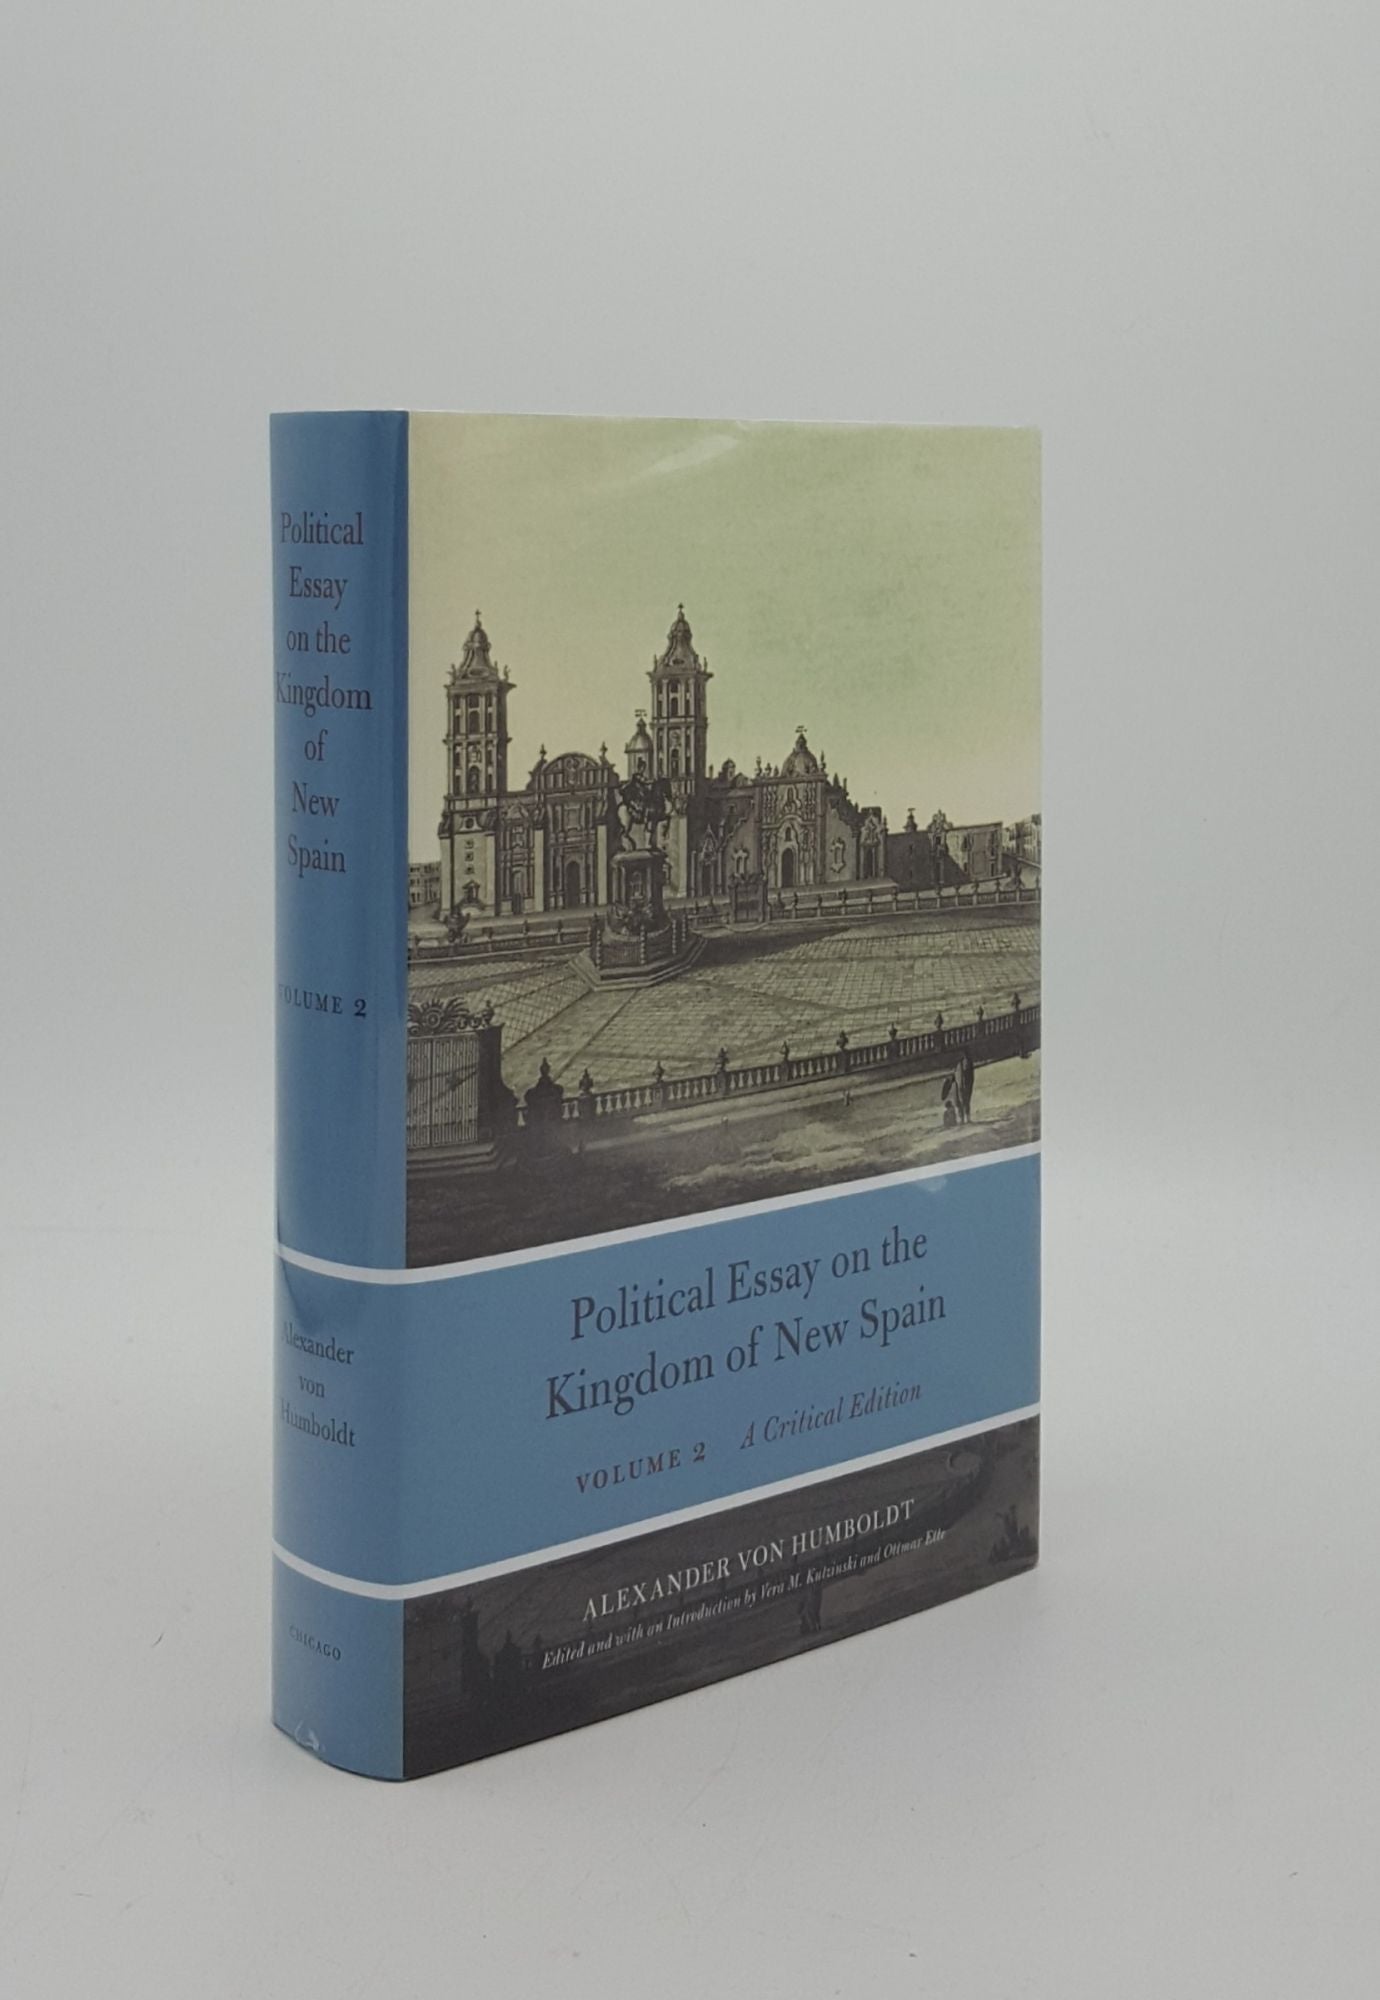 HUMBOLDT von Alexander - Political Essay on the Kingdom of New Spain a Critical Edition Volume 3